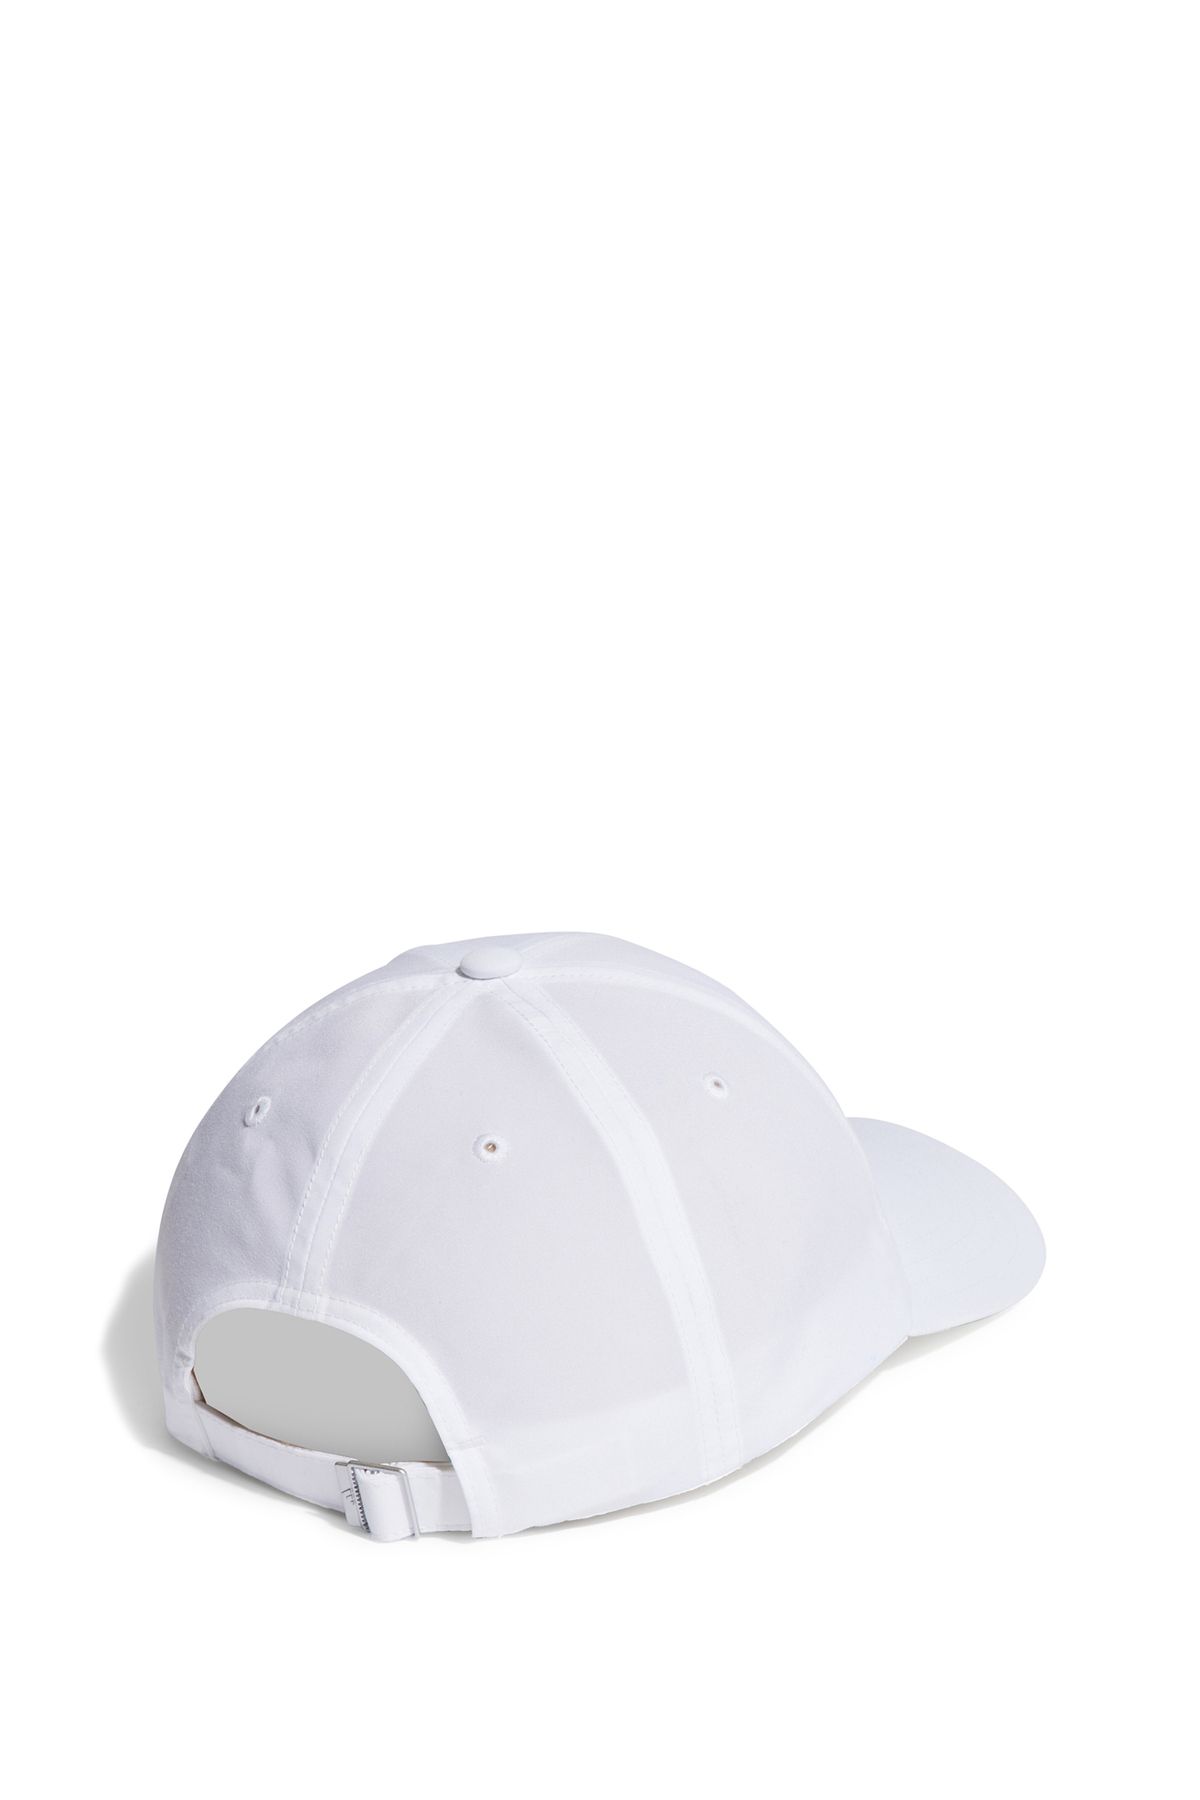 adidas Open White Unisex Hat IC2069 Run